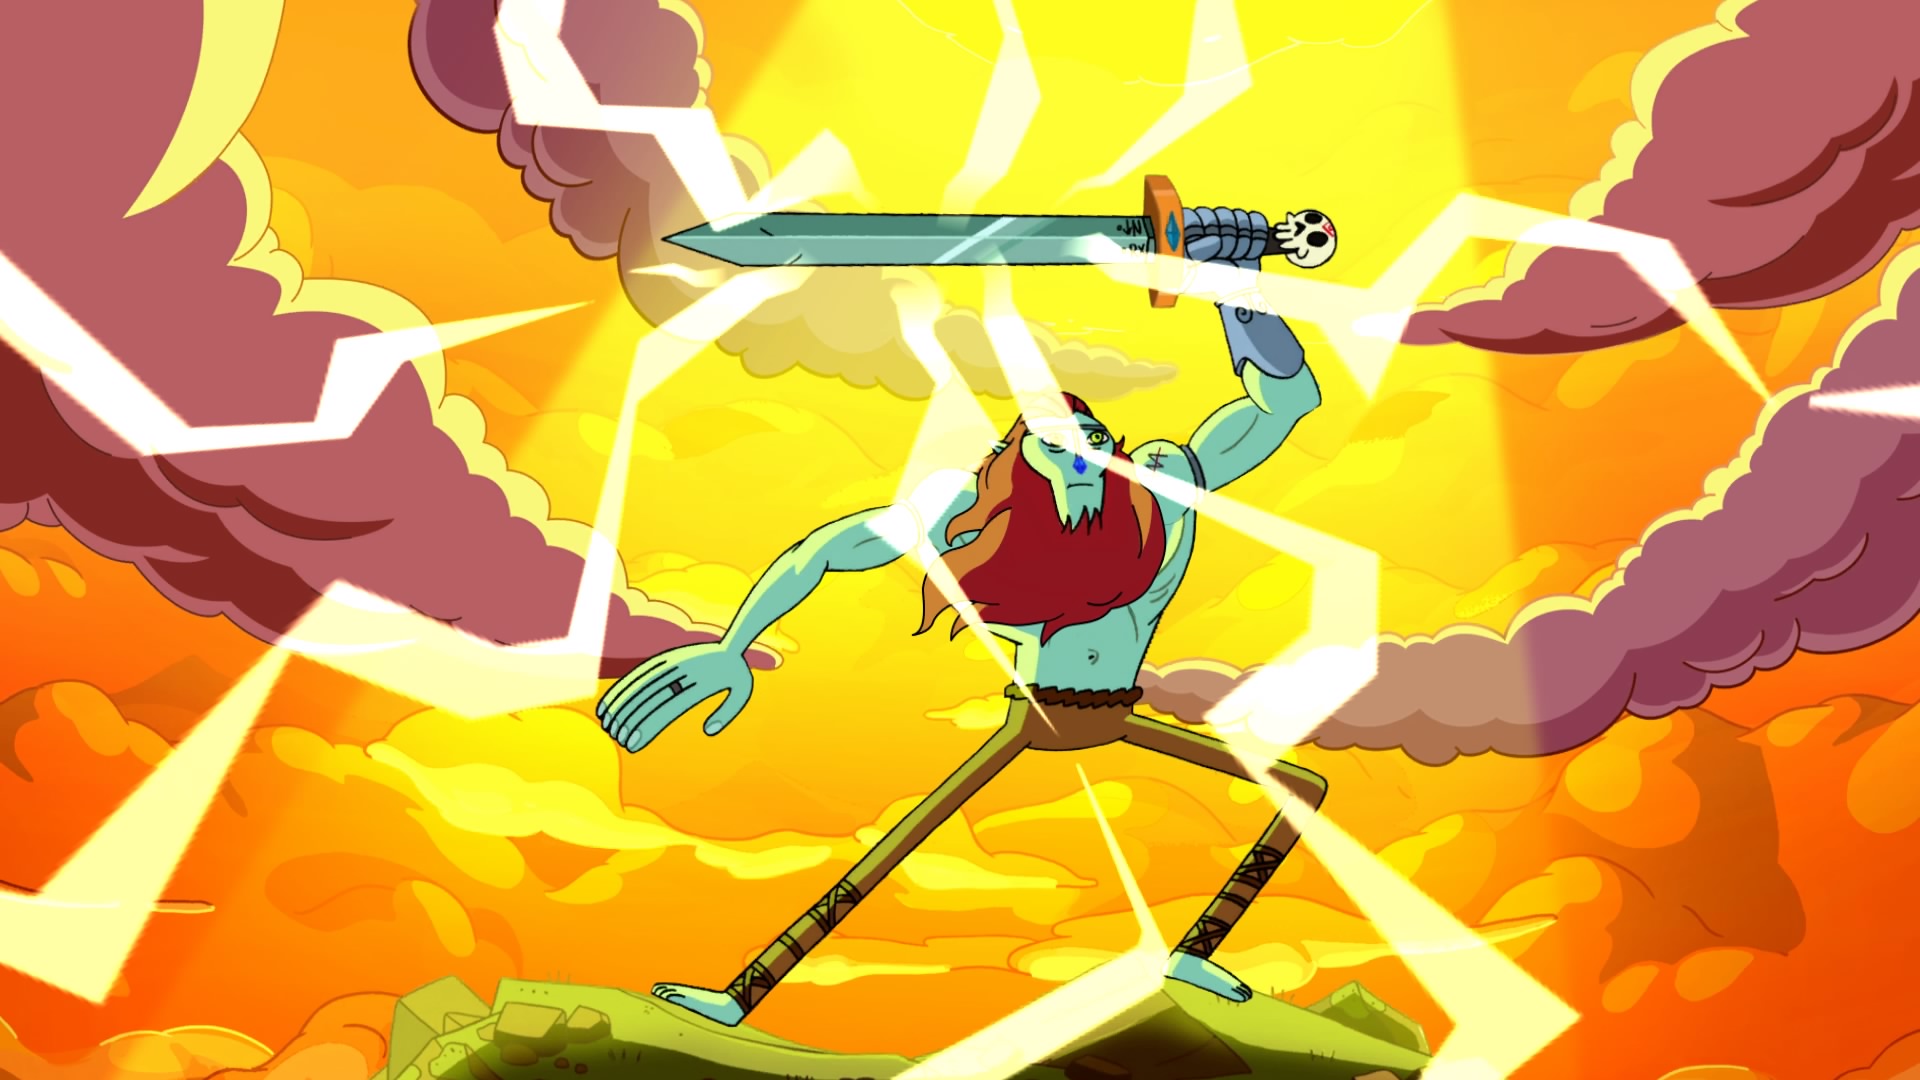 Cartoon Network: Battle Crashers